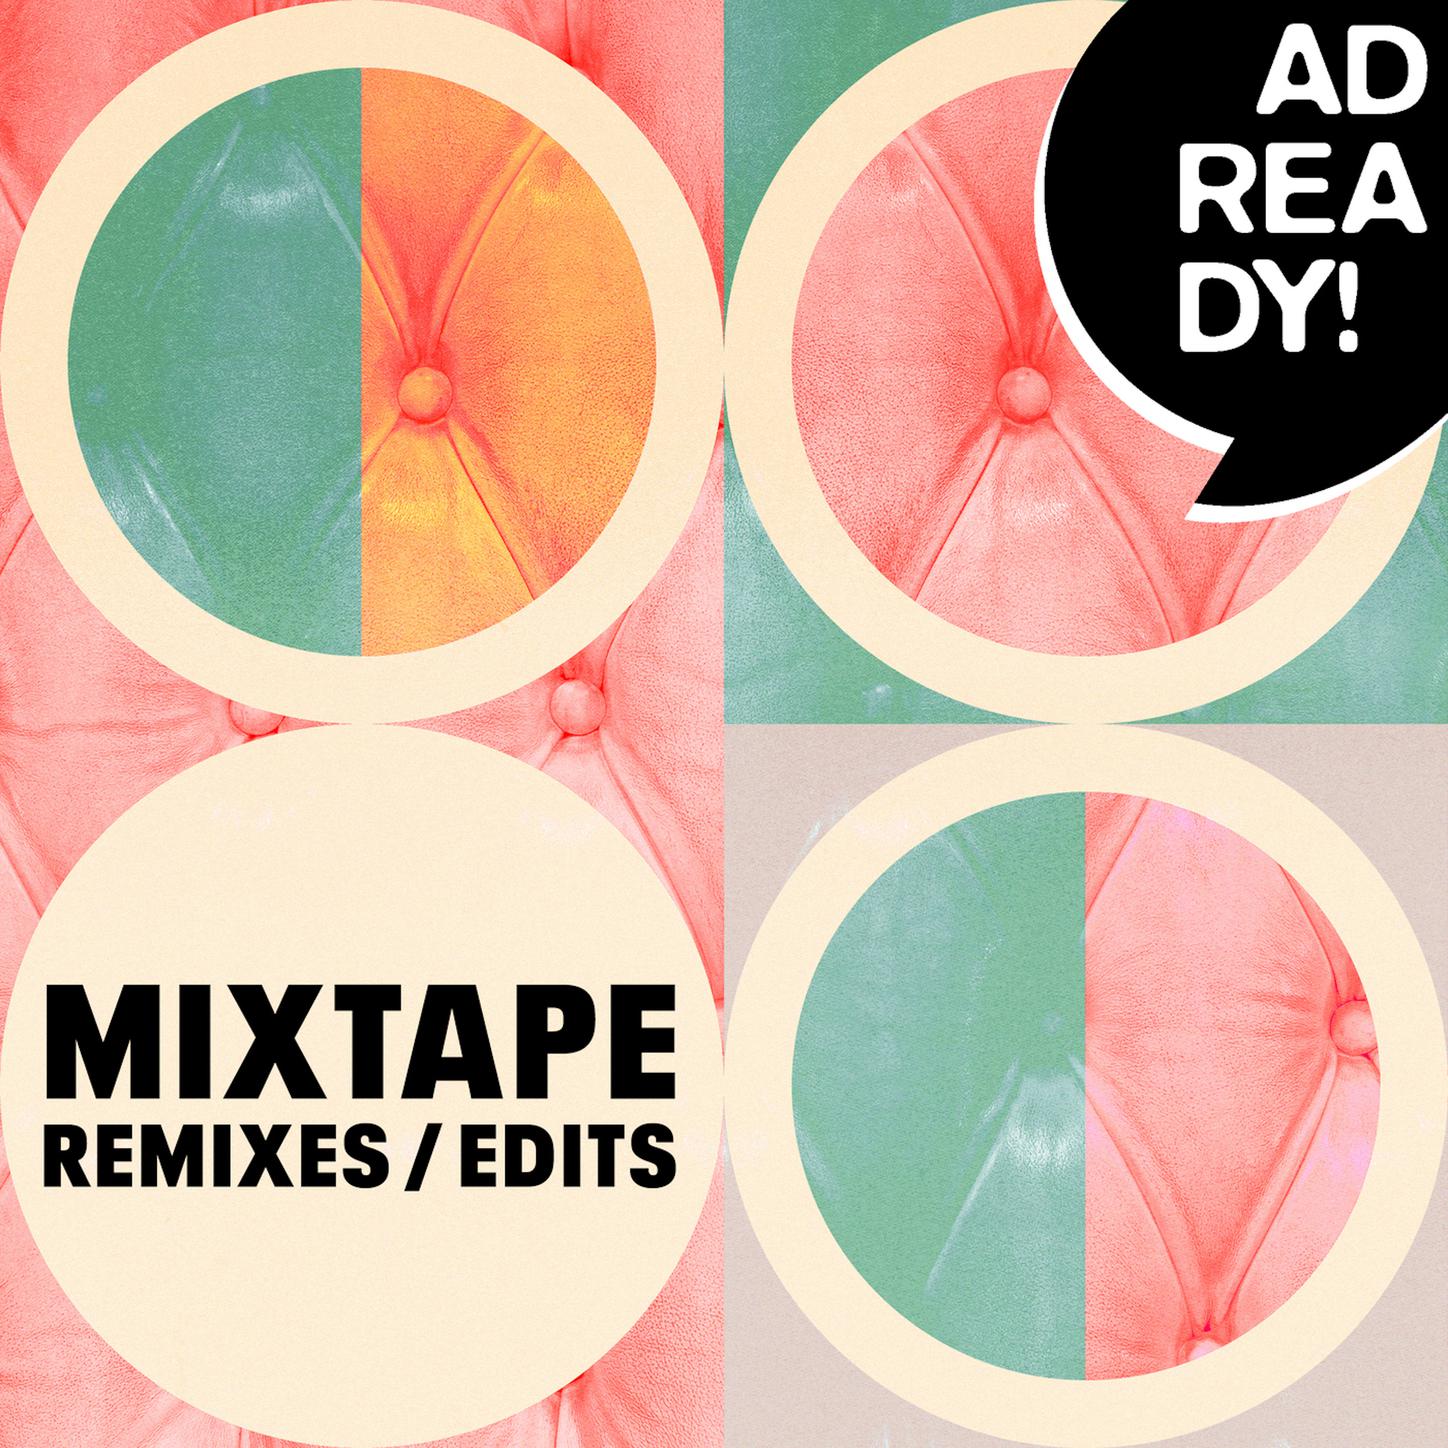 Mixtape: Remixes/Edits (Ad Ready!)